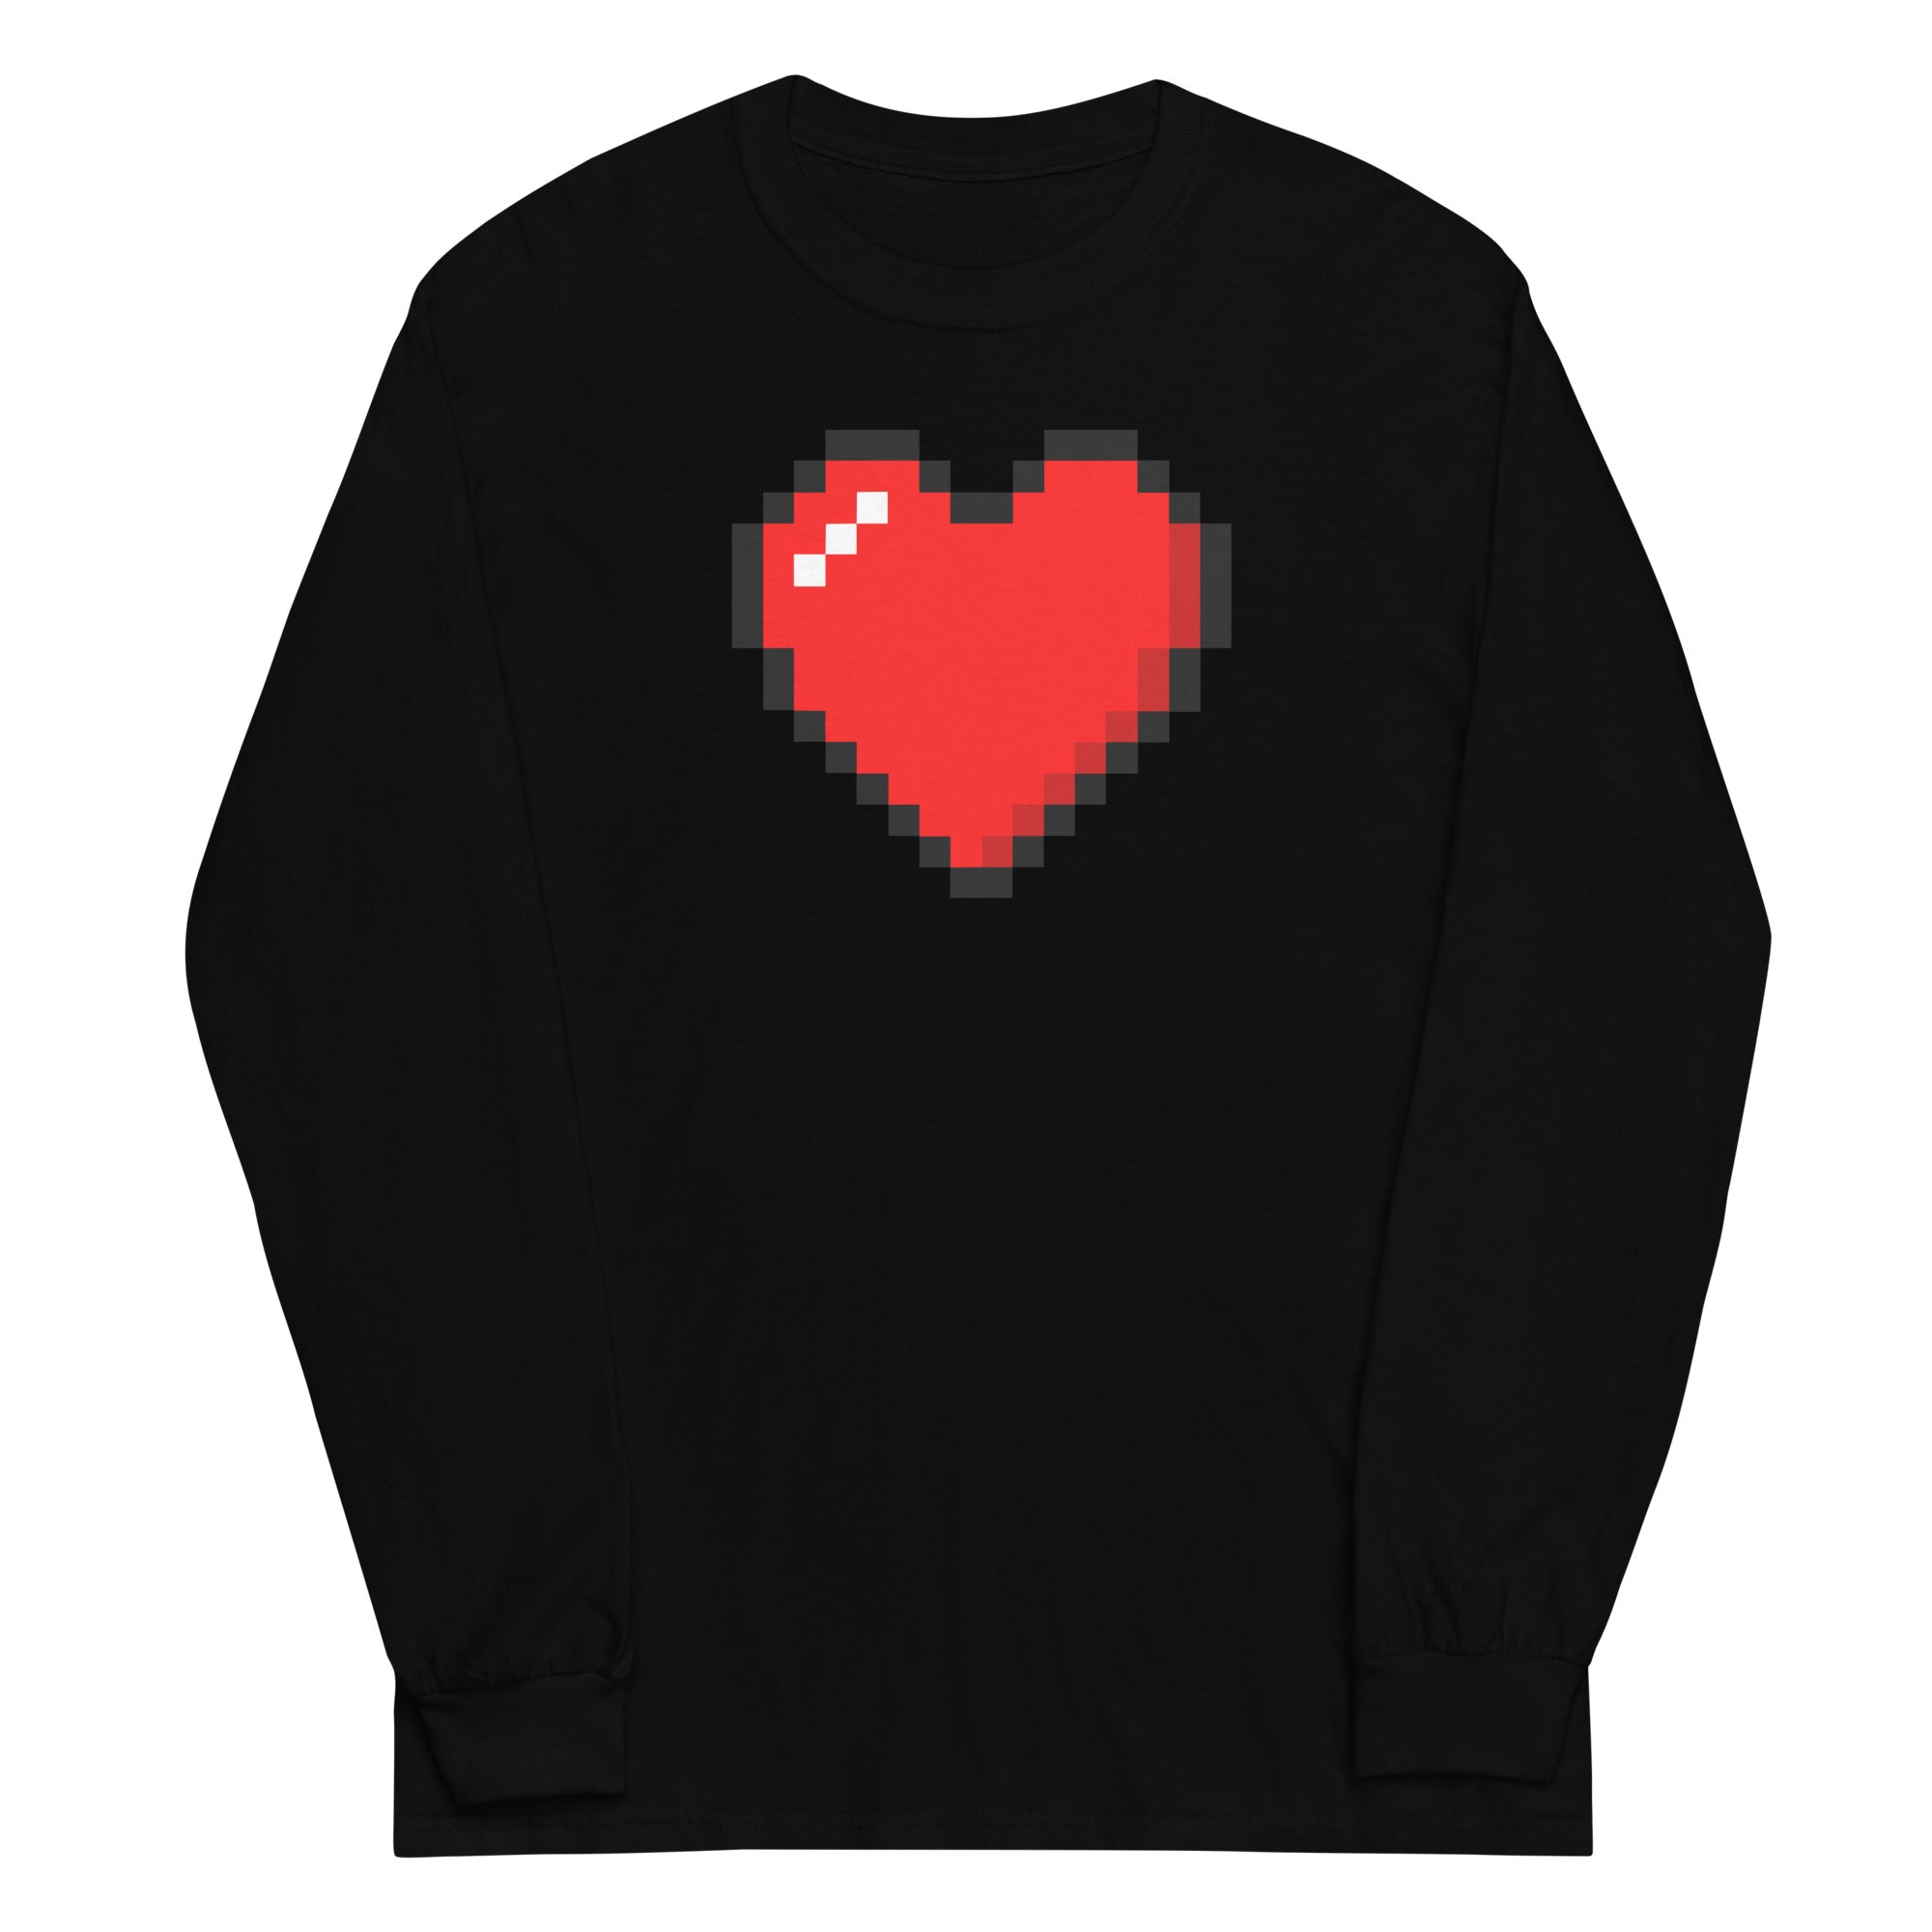 Retro 8 Bit Video Game Pixelated Heart Long Sleeve Shirt